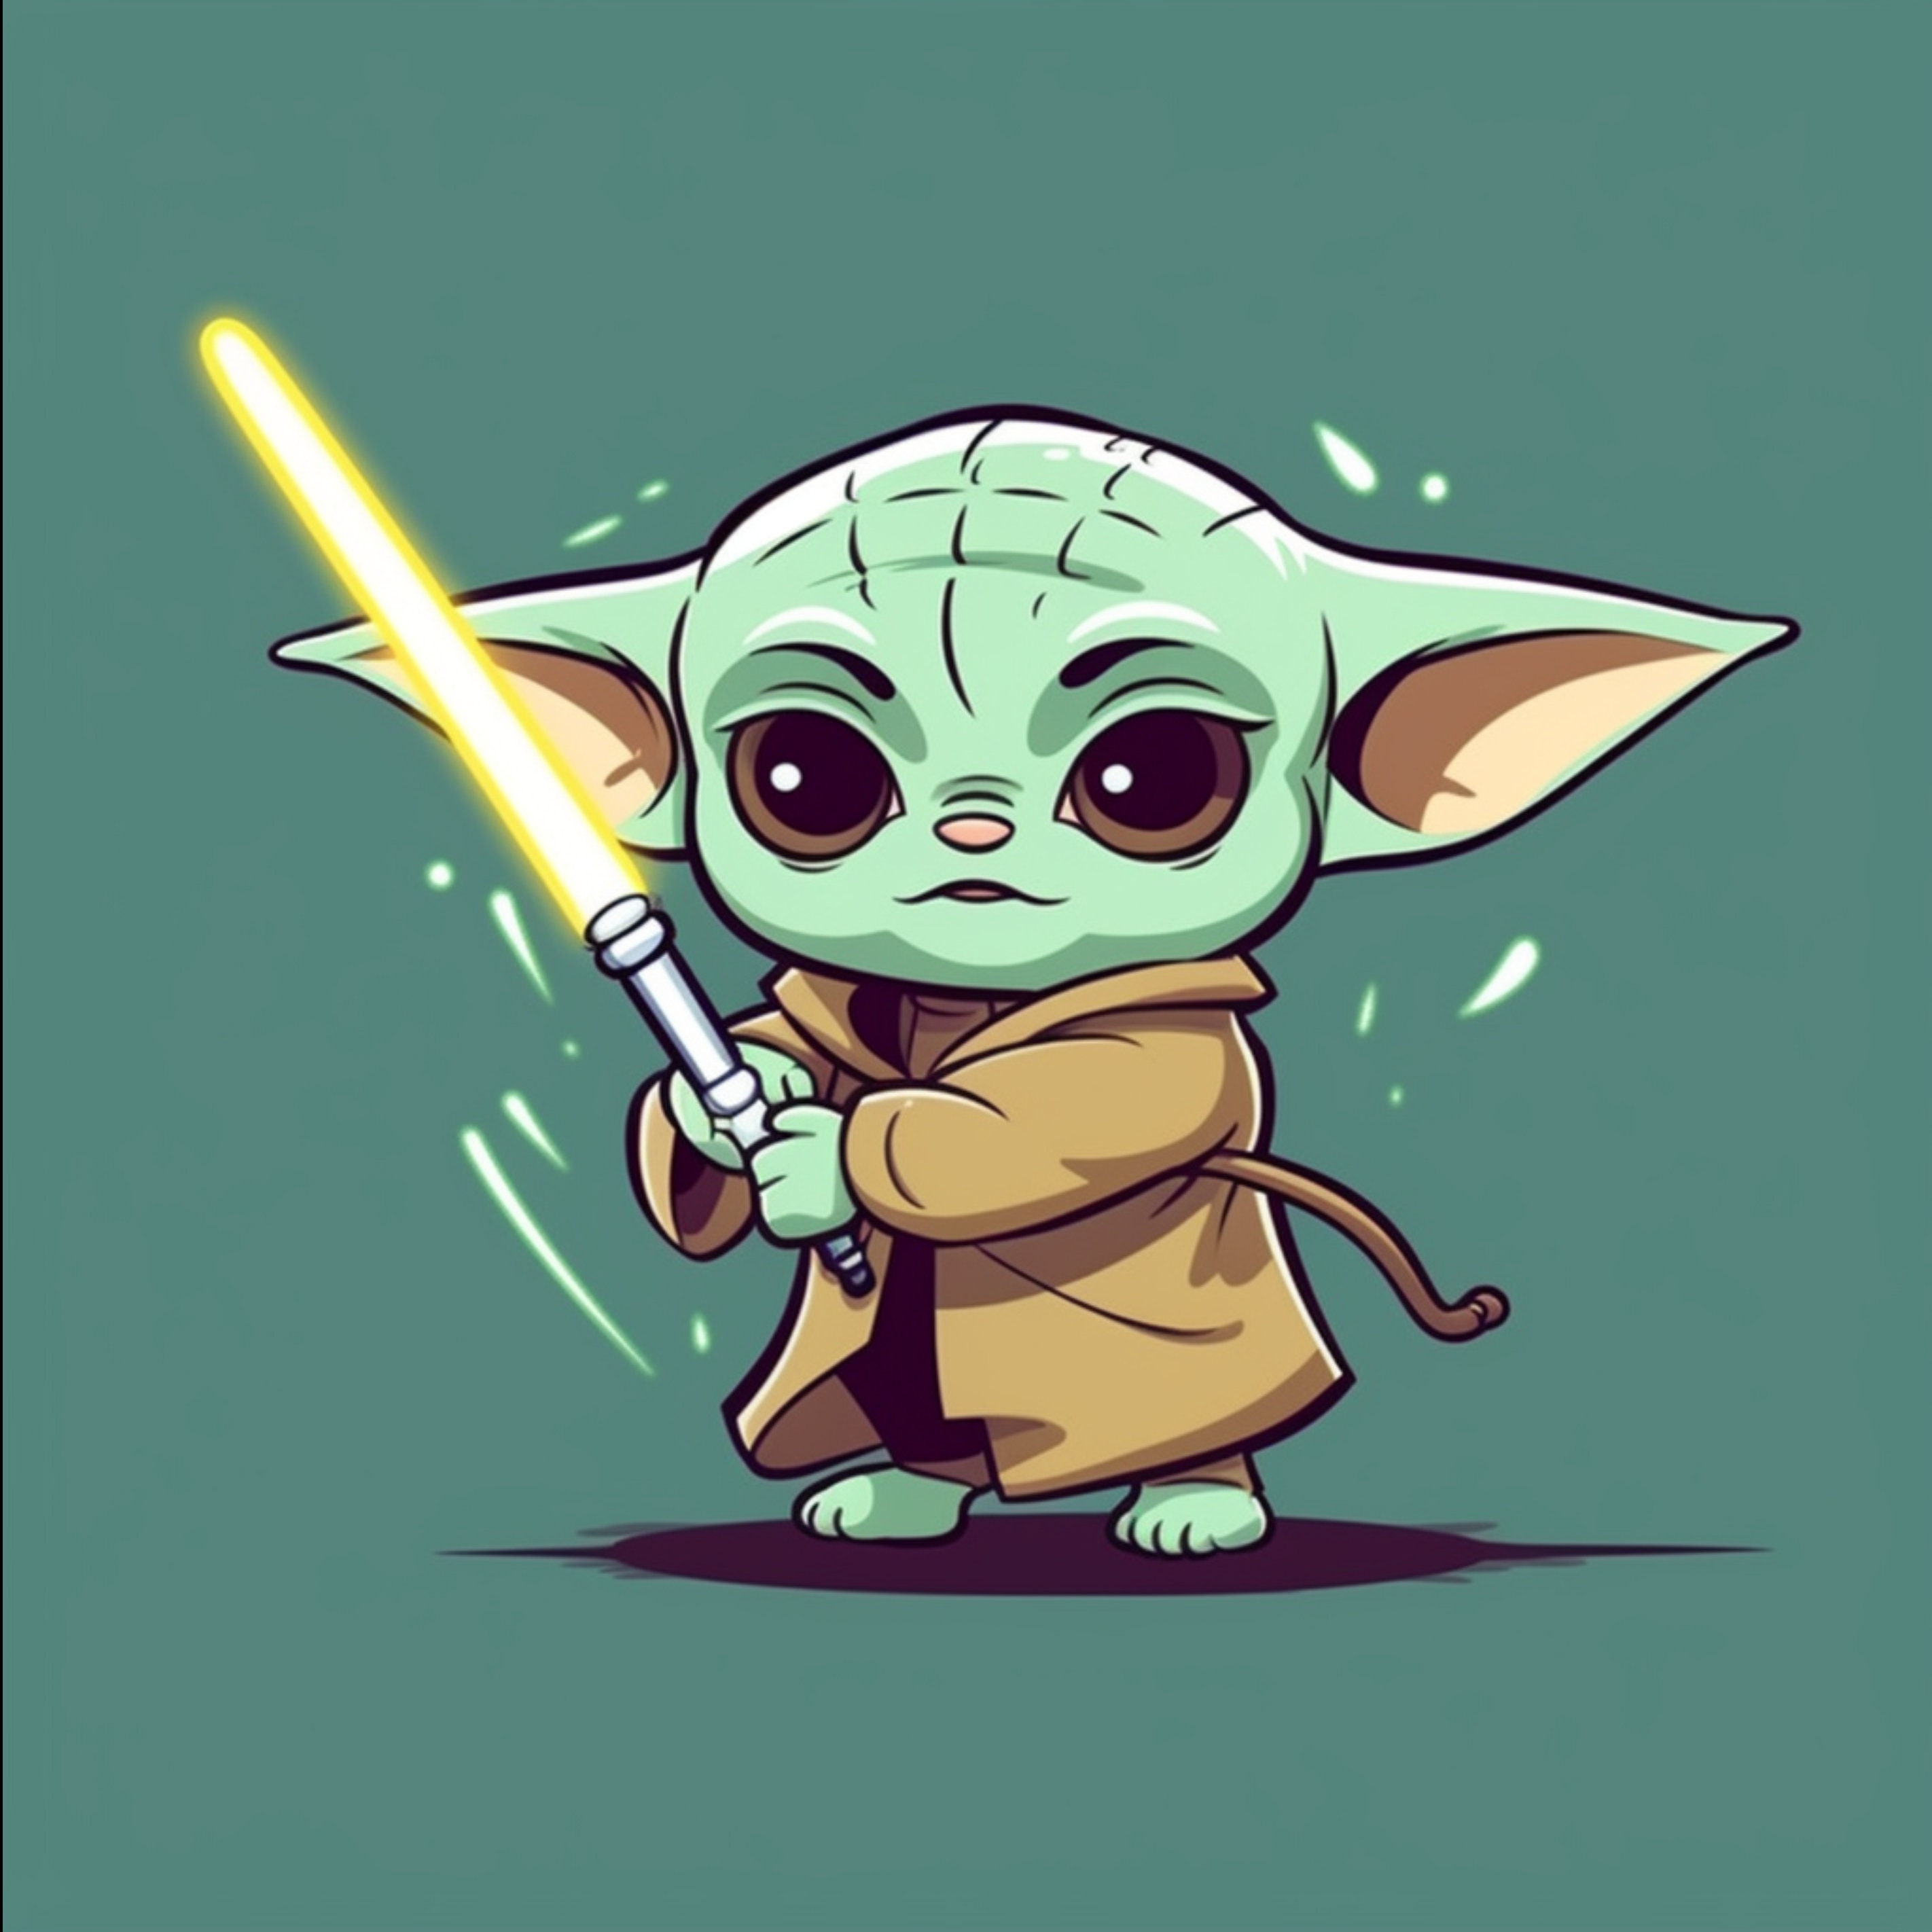 Cute Baby Yoda Star Wars Mandalorian Digital Image .PNG file